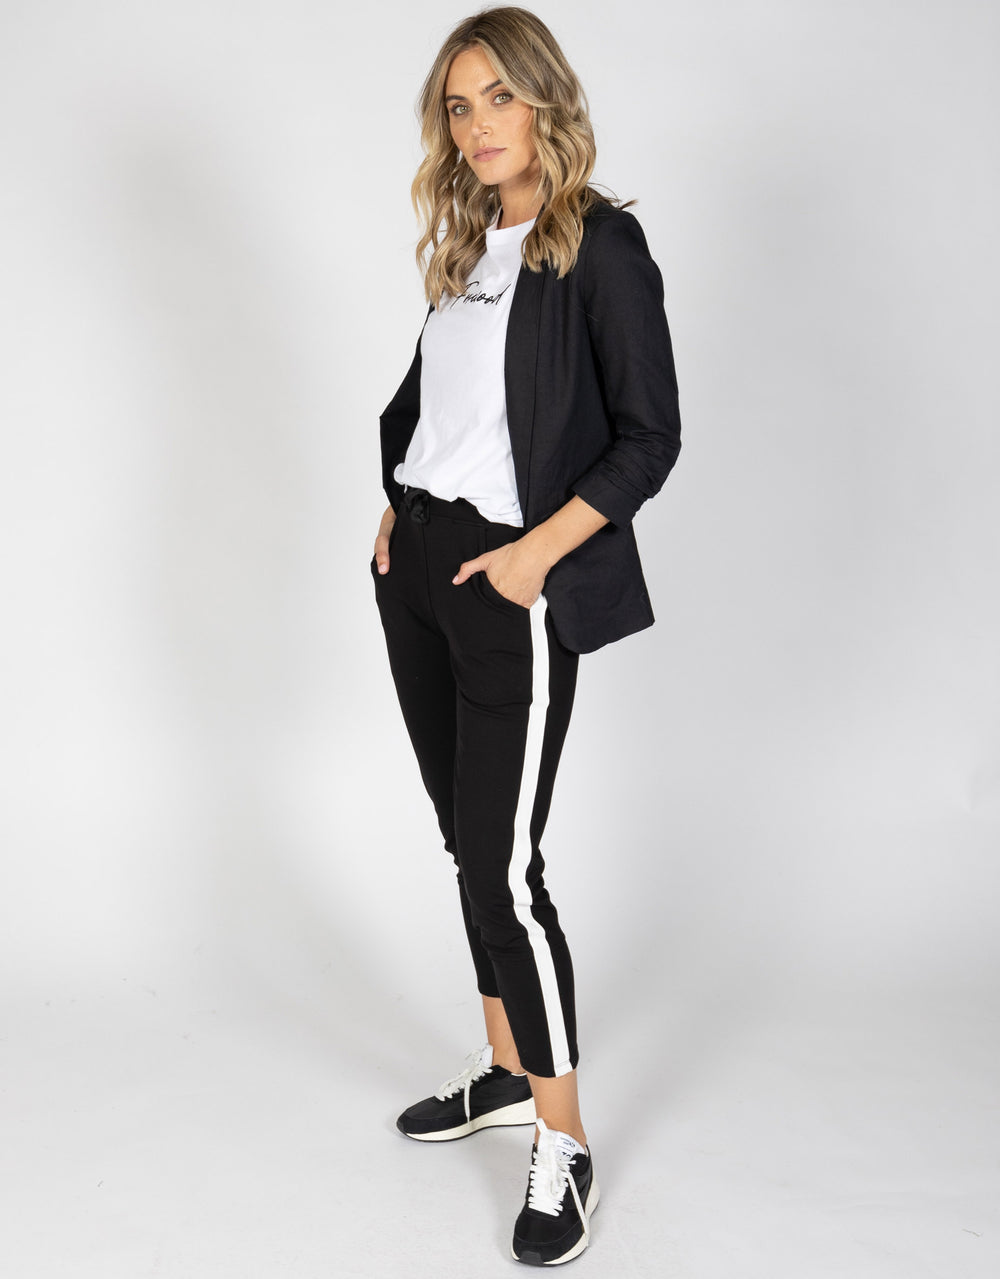 paulaglazebrook. Women's Clothing Milan Joggers Black/Off White